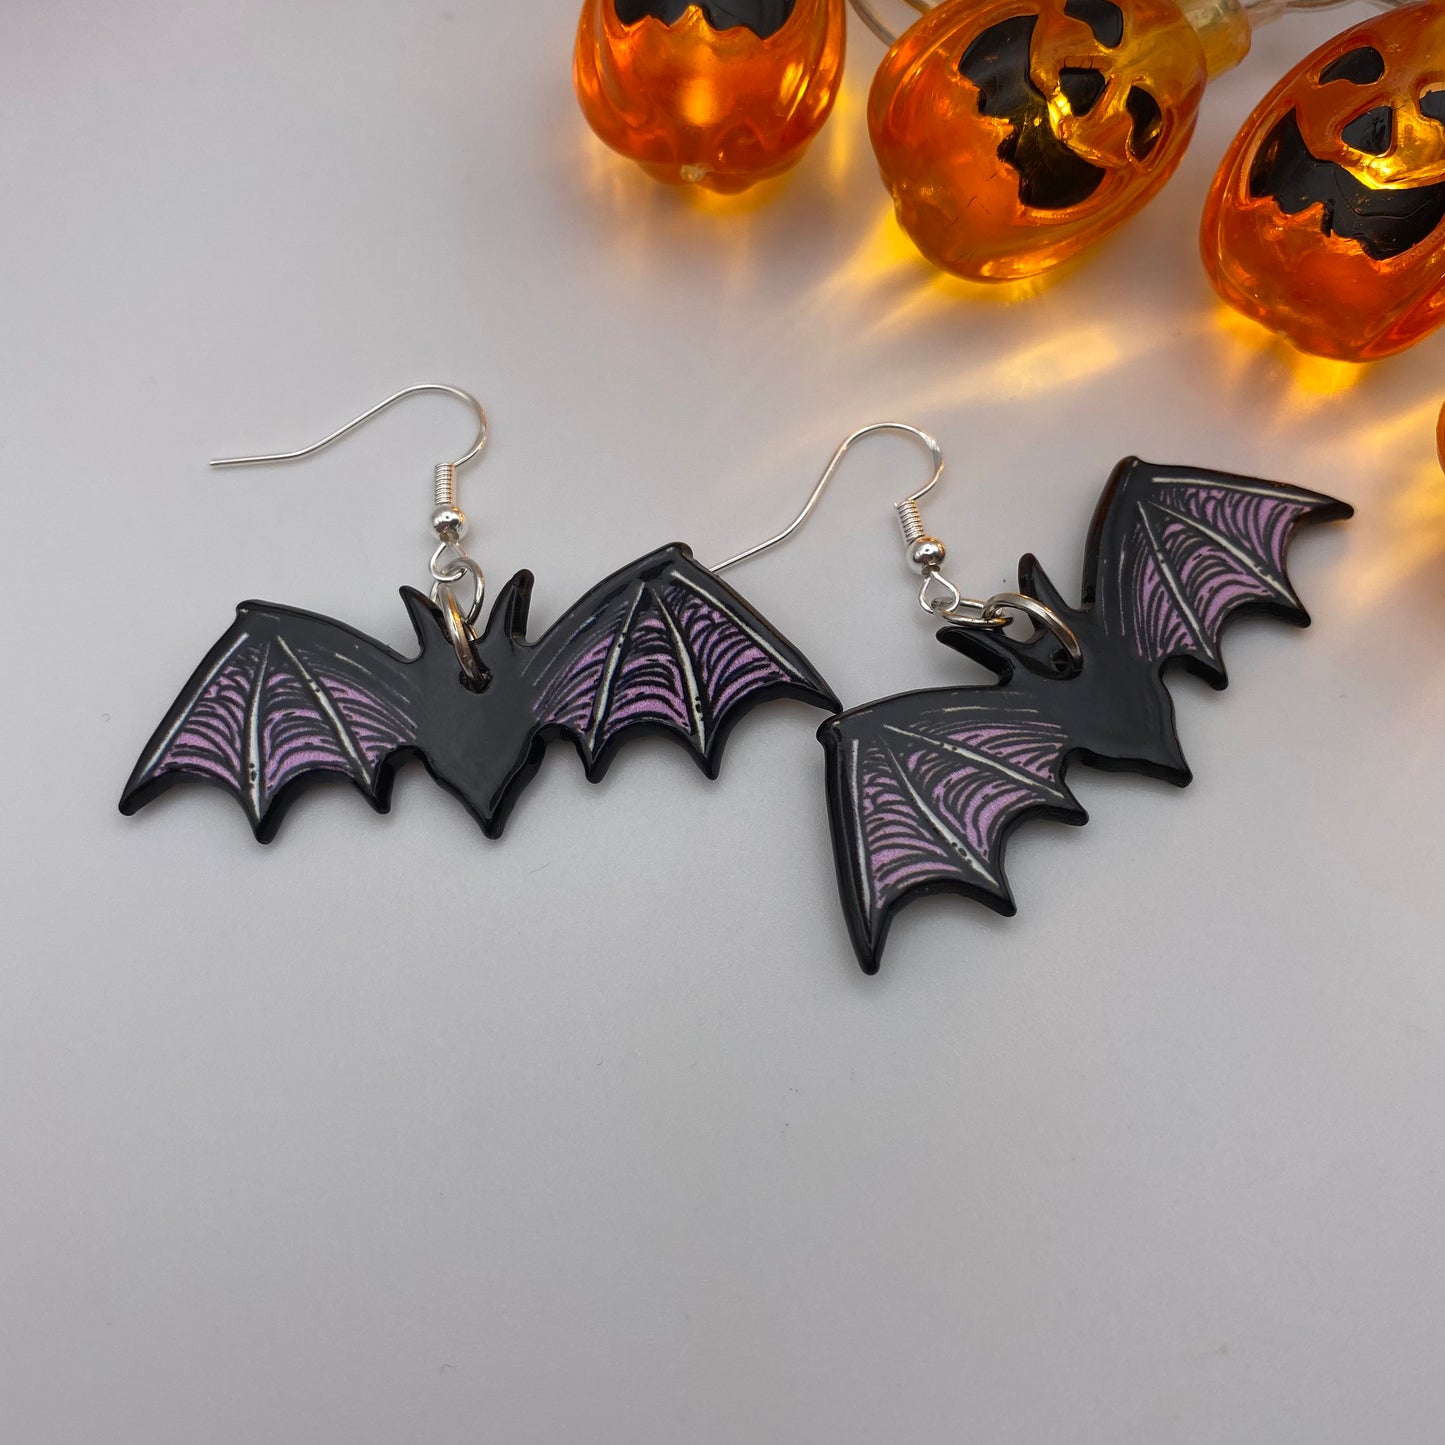 Big Black Bat Earrings